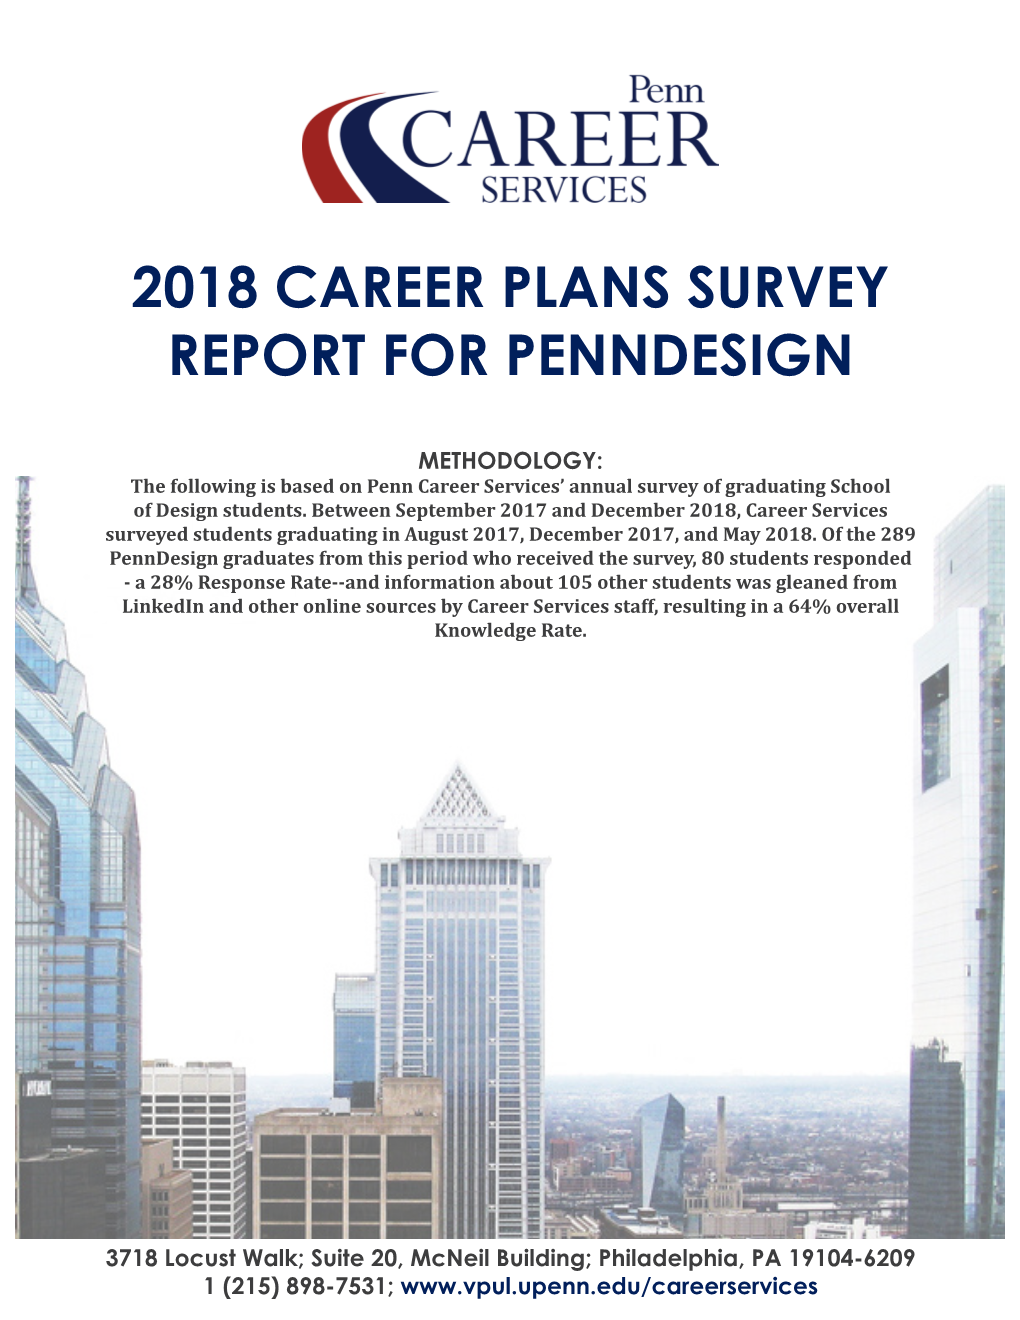 2018 Career Plans Survey Report for Penndesign